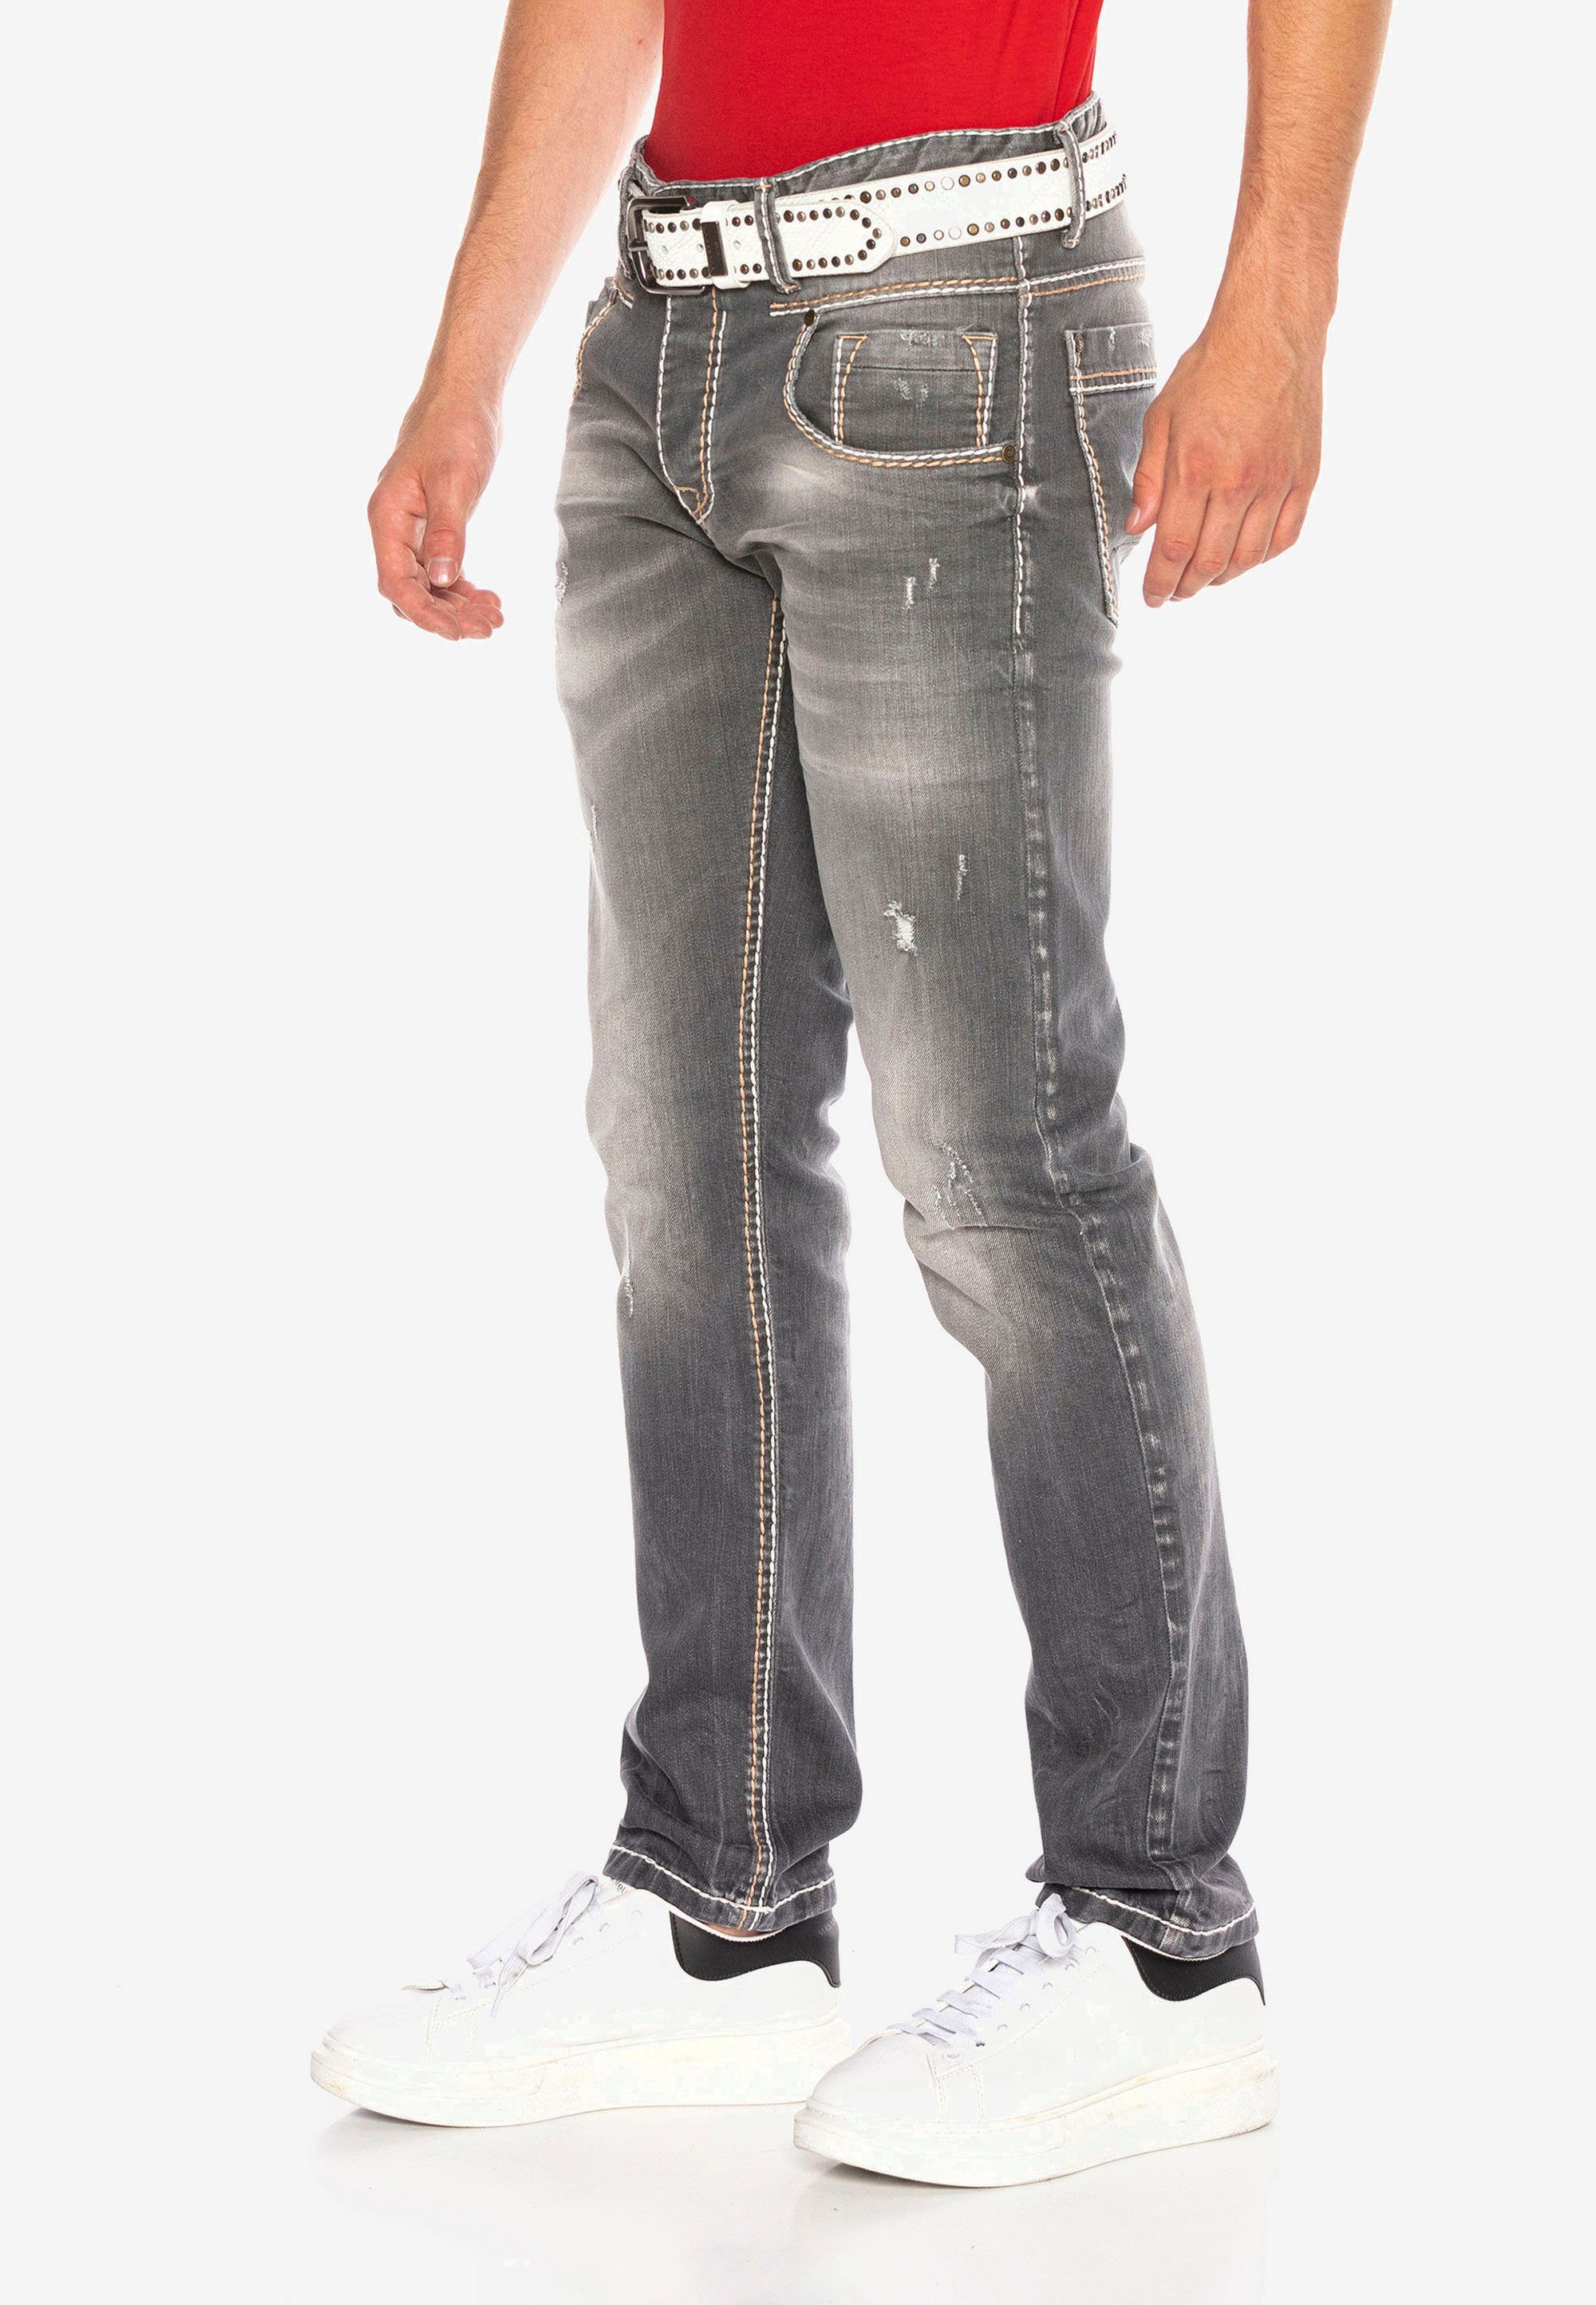 & CD668 Baxx modernem Fit-Schnitt Straight Jeans in Bequeme Cipo